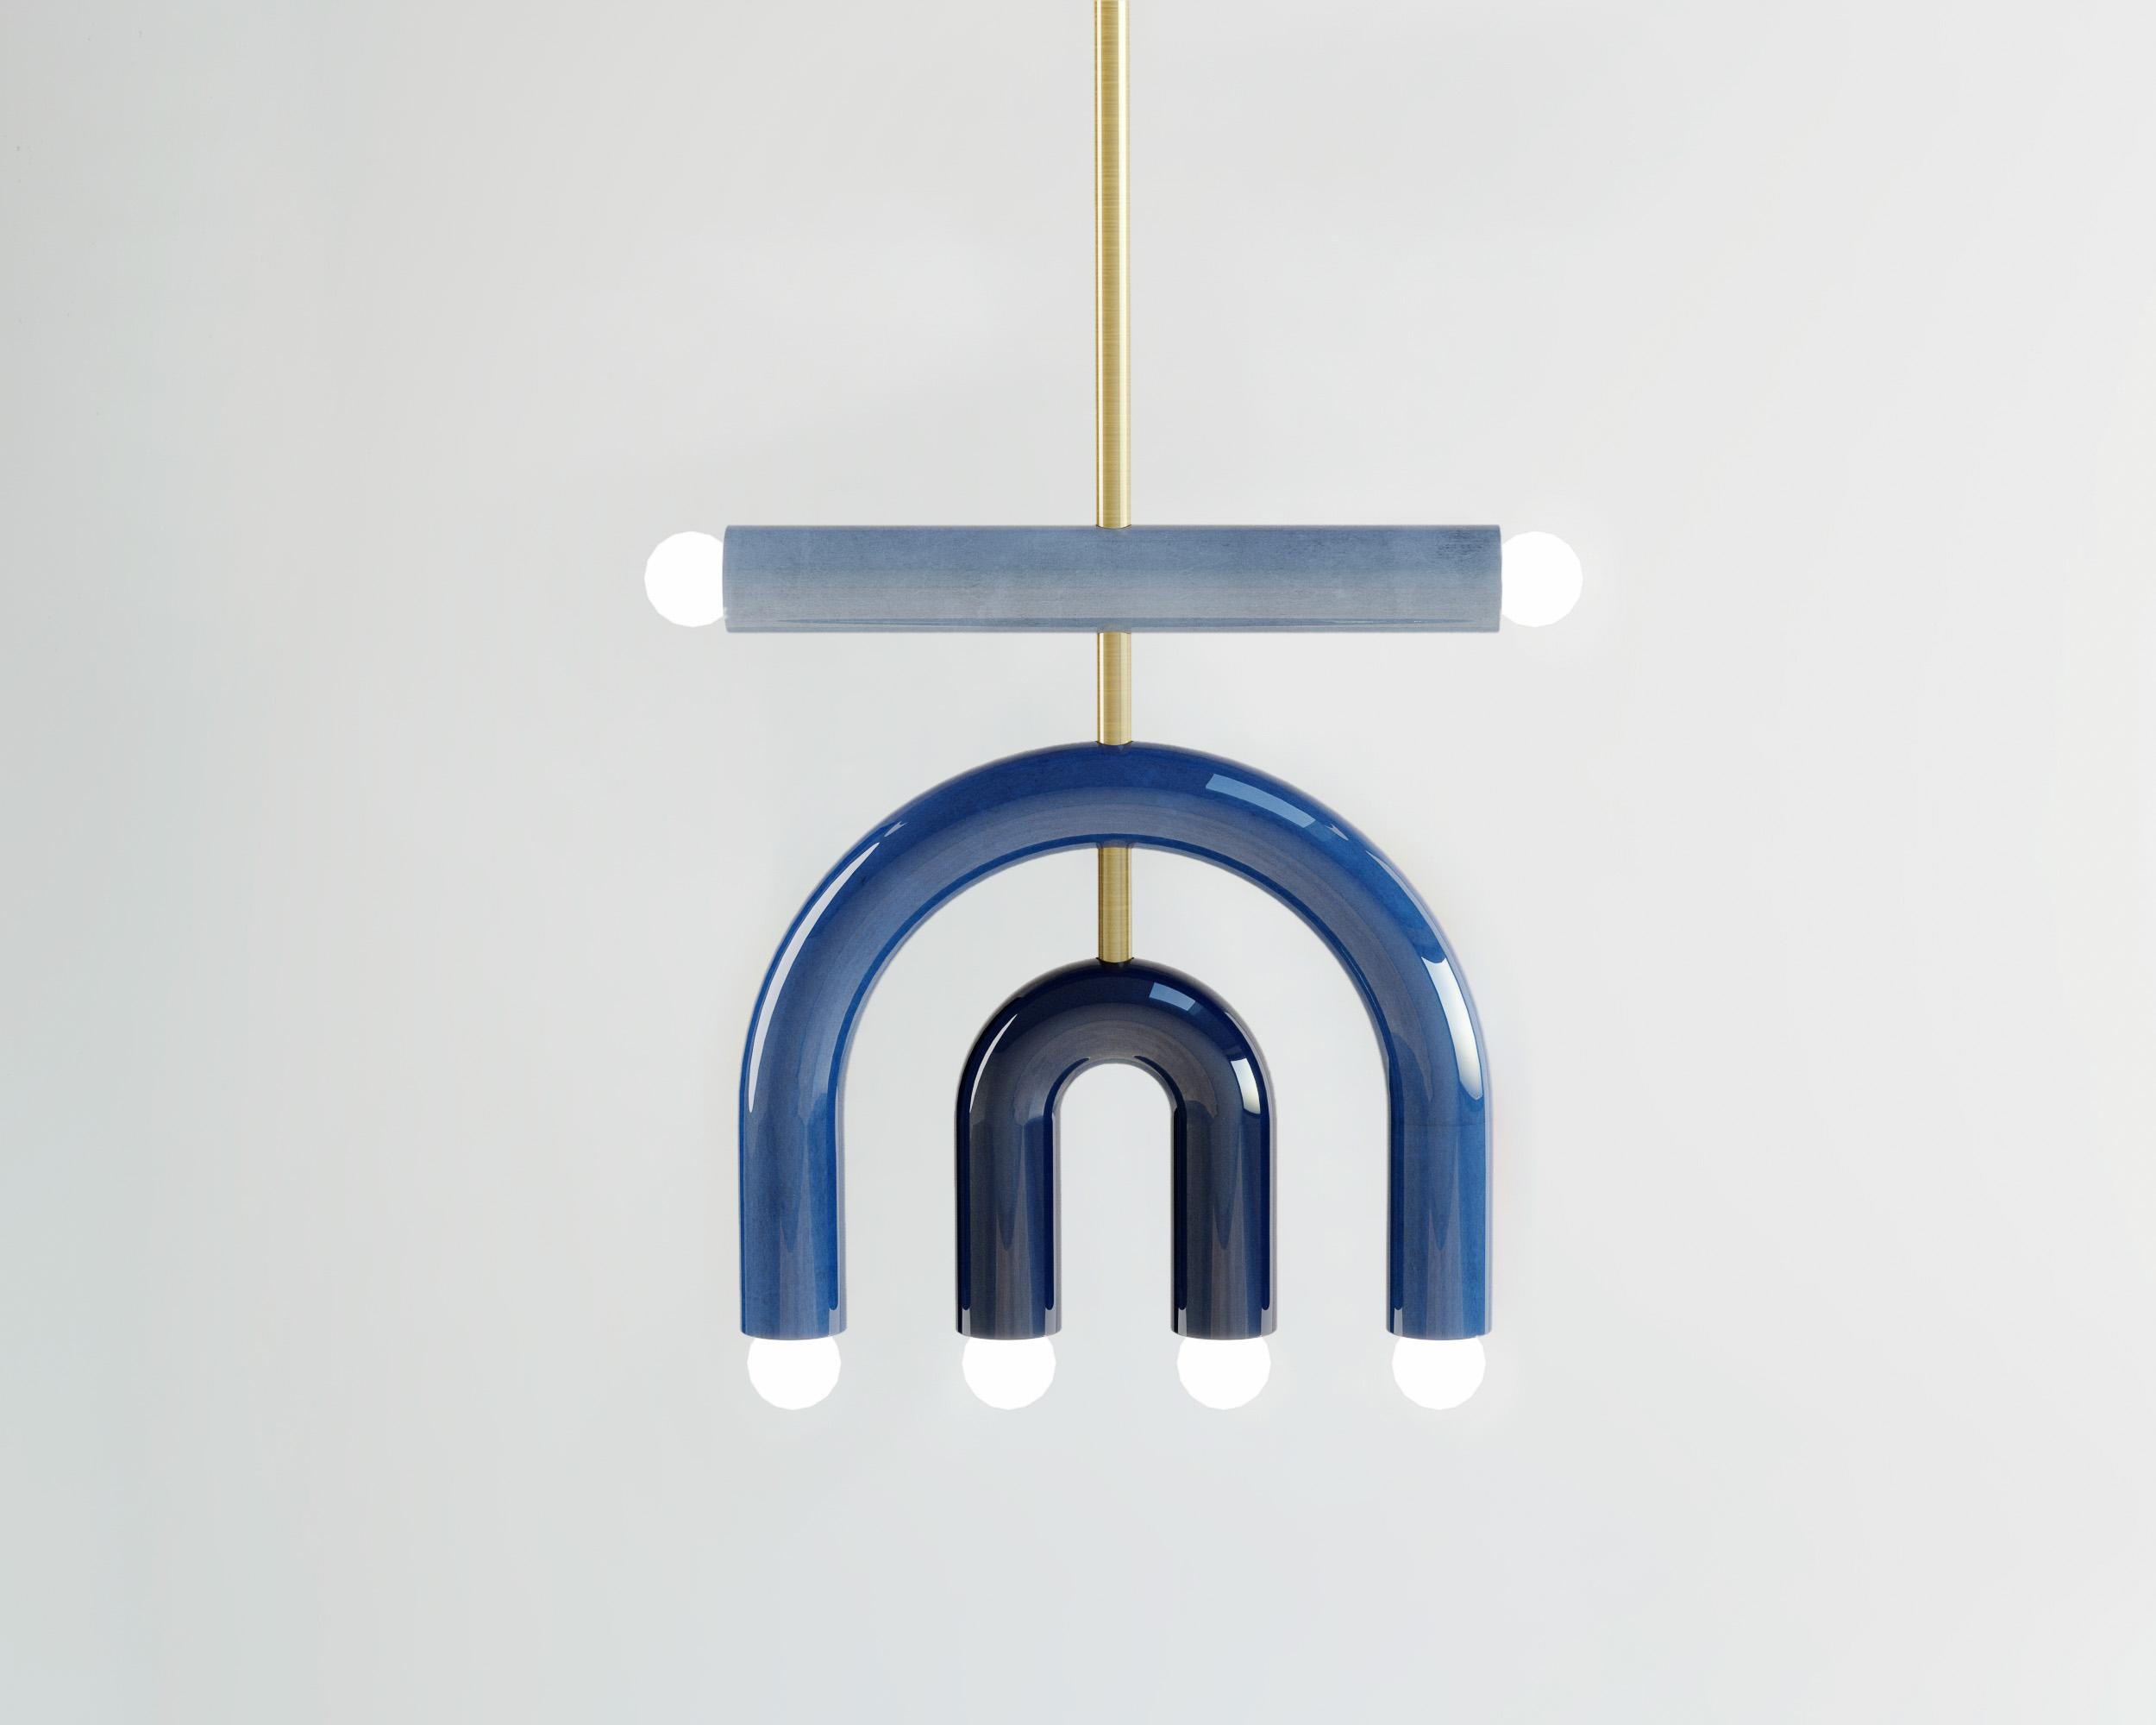 Pendant lamp / ceiling lamp / chandelier 
Designer: Pani Jurek
Model: TRN D1
Model shown: TRN D1, Light blue, Medium blue, Navy blue, Chrome rod 
Dimensions: H37.5 x 35 x 5 cm

Bulb (not included): E27/E26, compatible with US electric